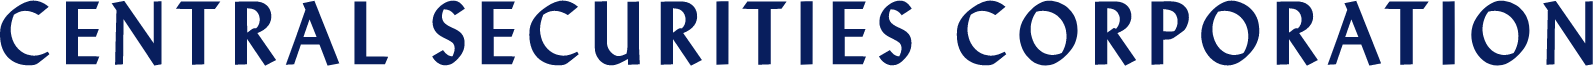 Central Securities logo large (transparent PNG)